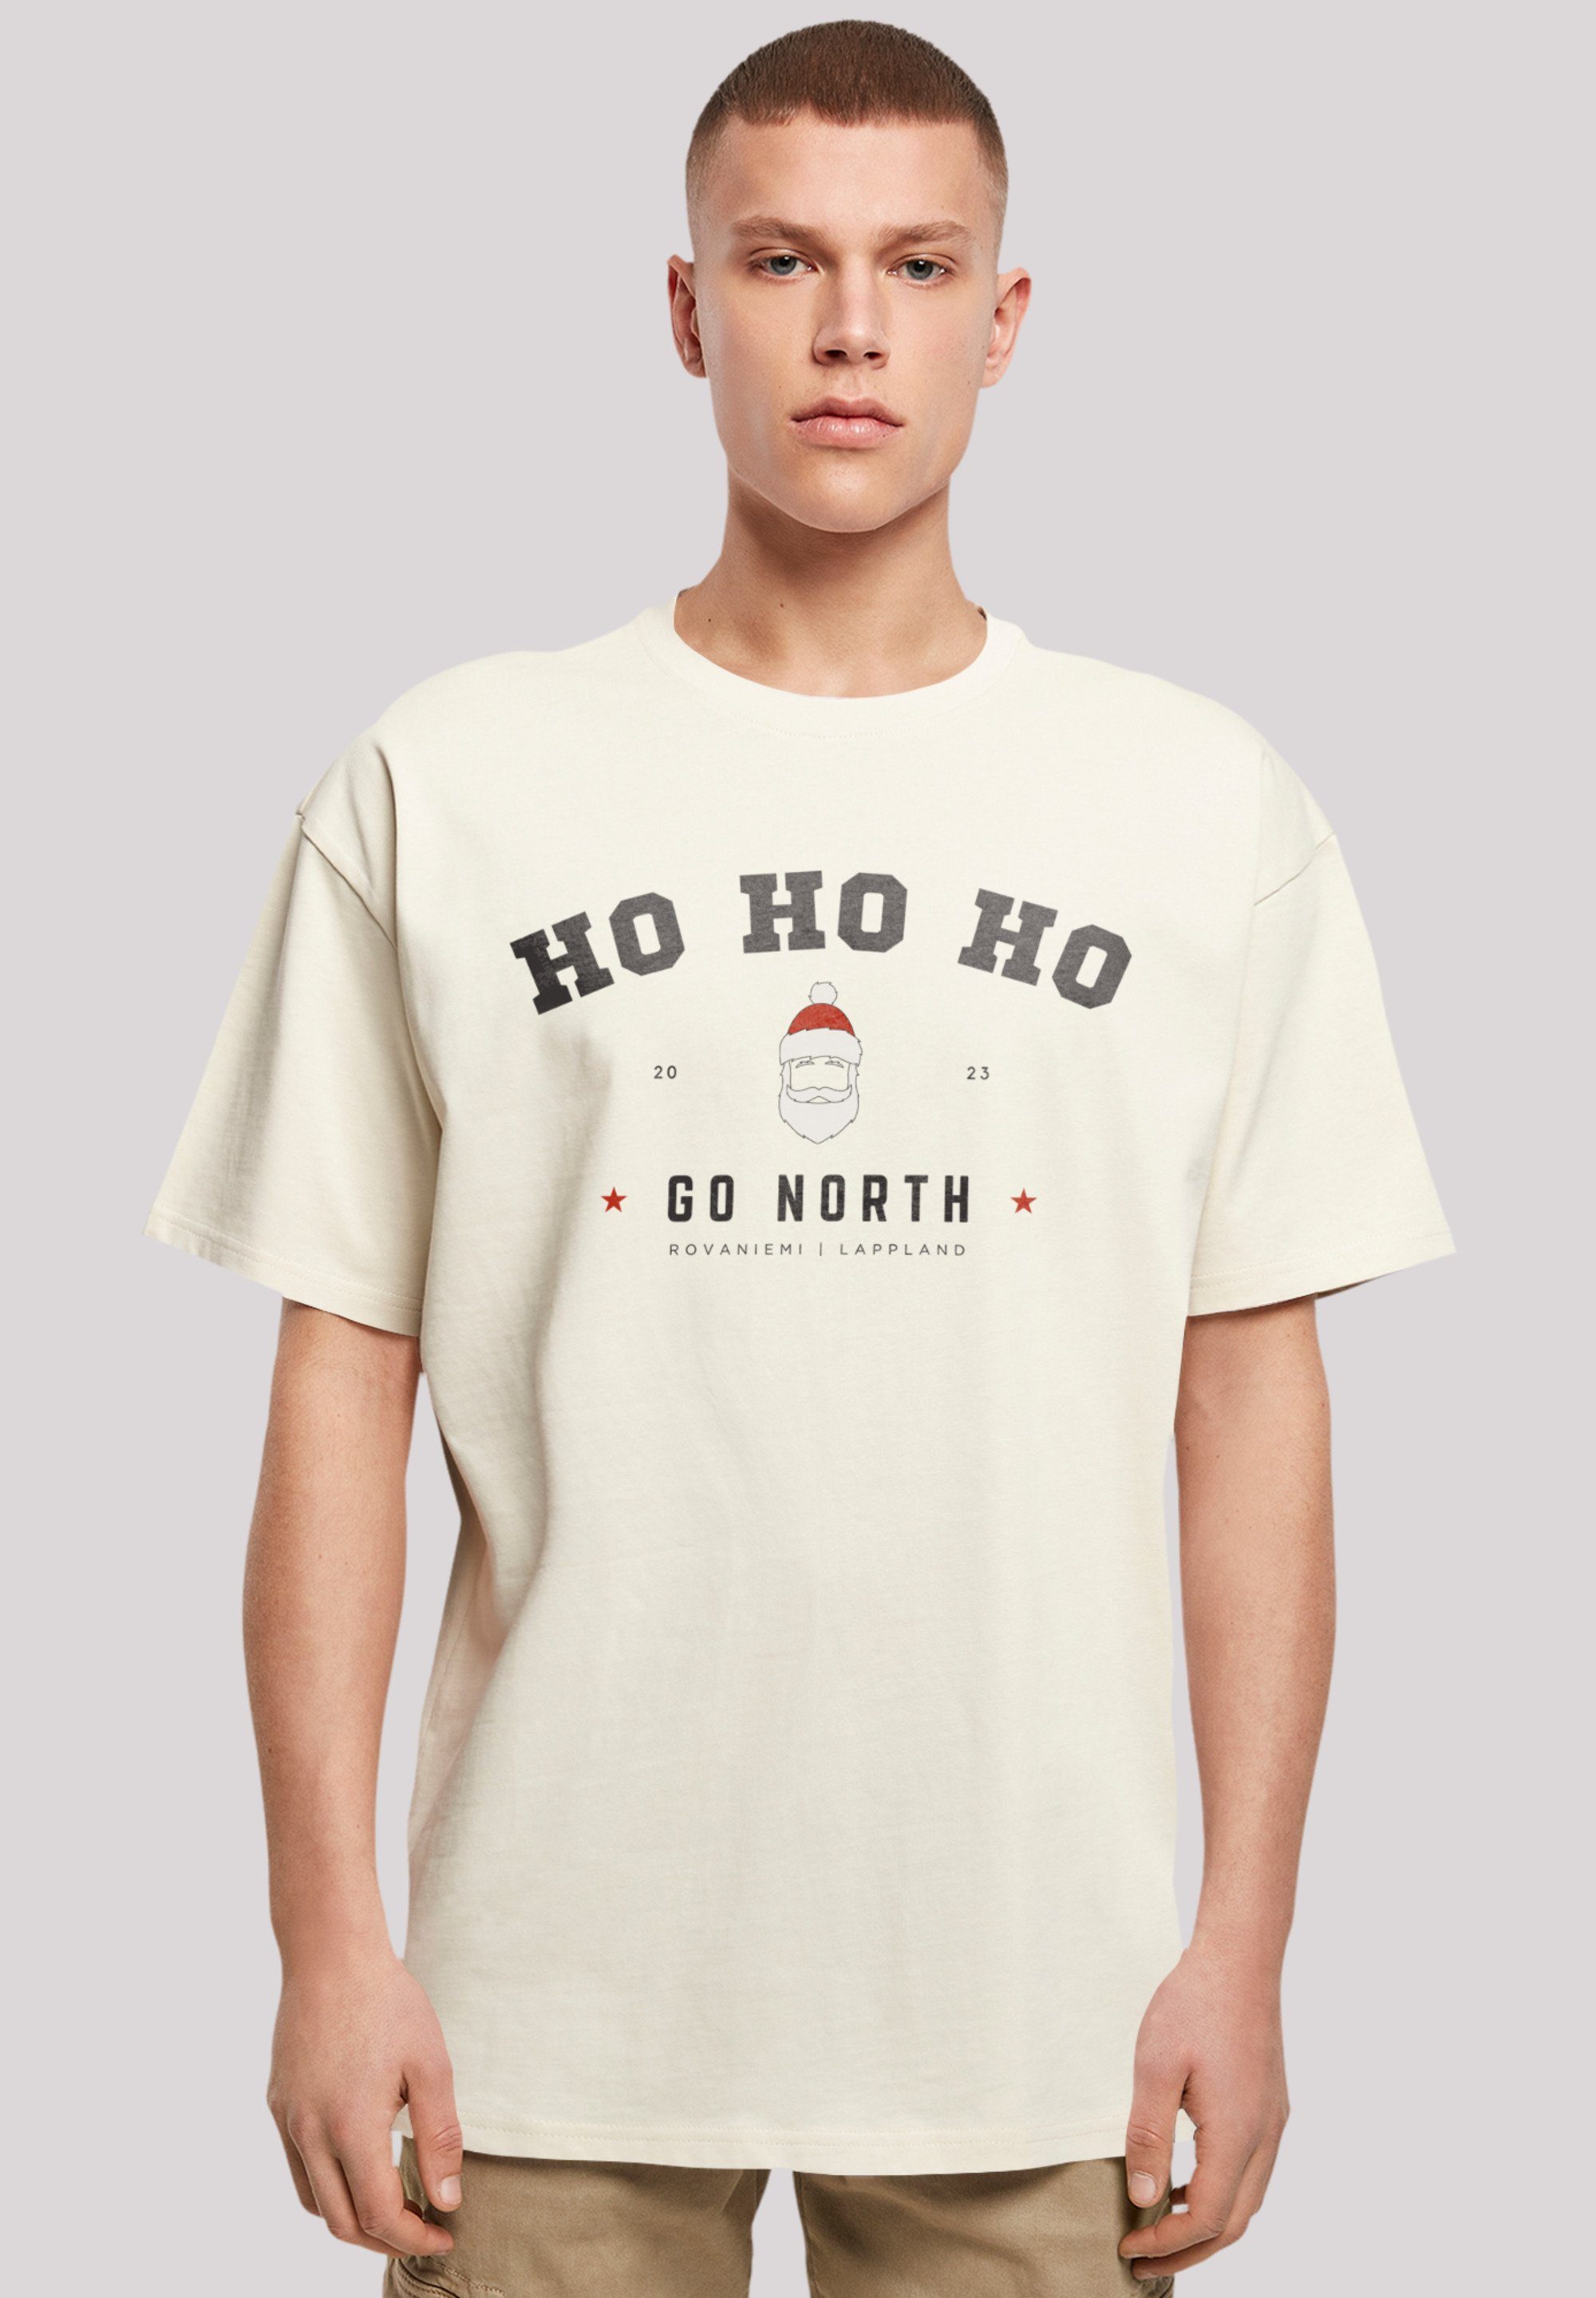 Ho Santa Claus Geschenk, Weihnachten T-Shirt Ho Ho Weihnachten, F4NT4STIC Logo sand